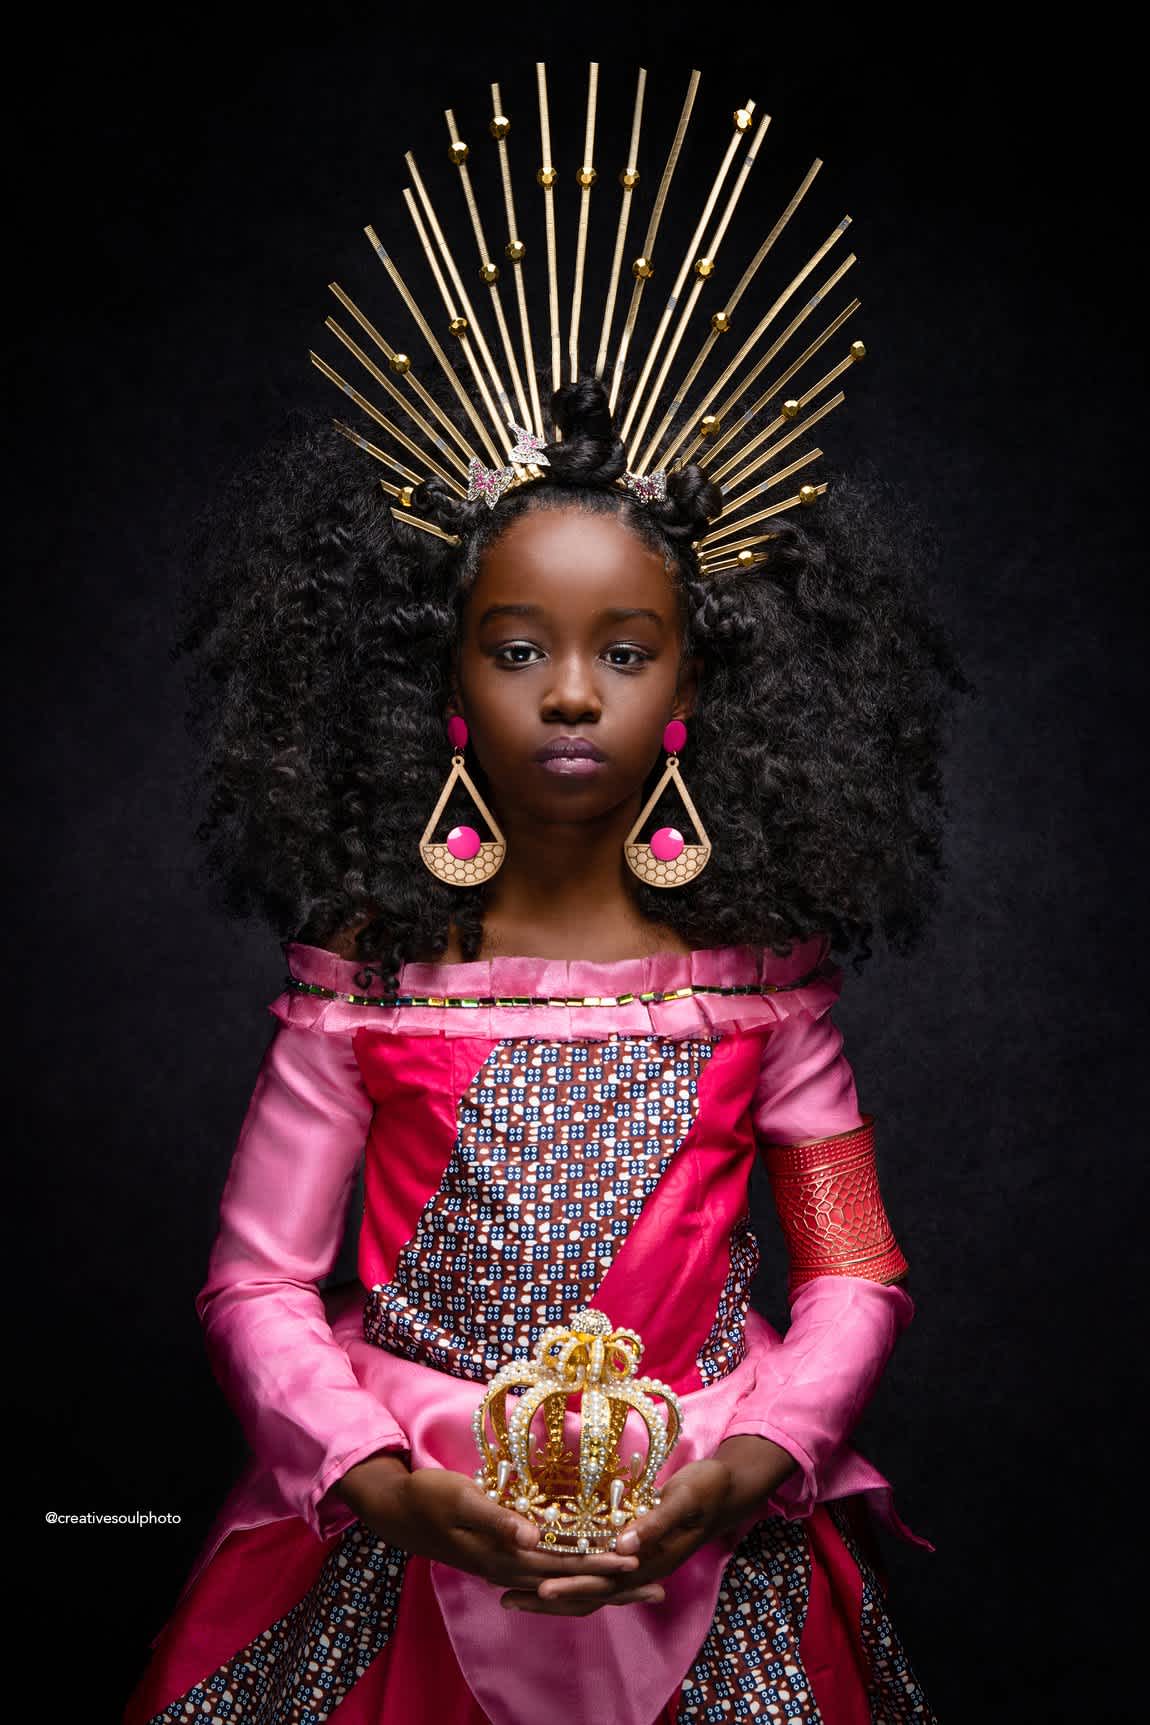 Photo Series Reimagines Classic Fairy Tales Through the Eyes of Fierce Black Princesses | Mom.com